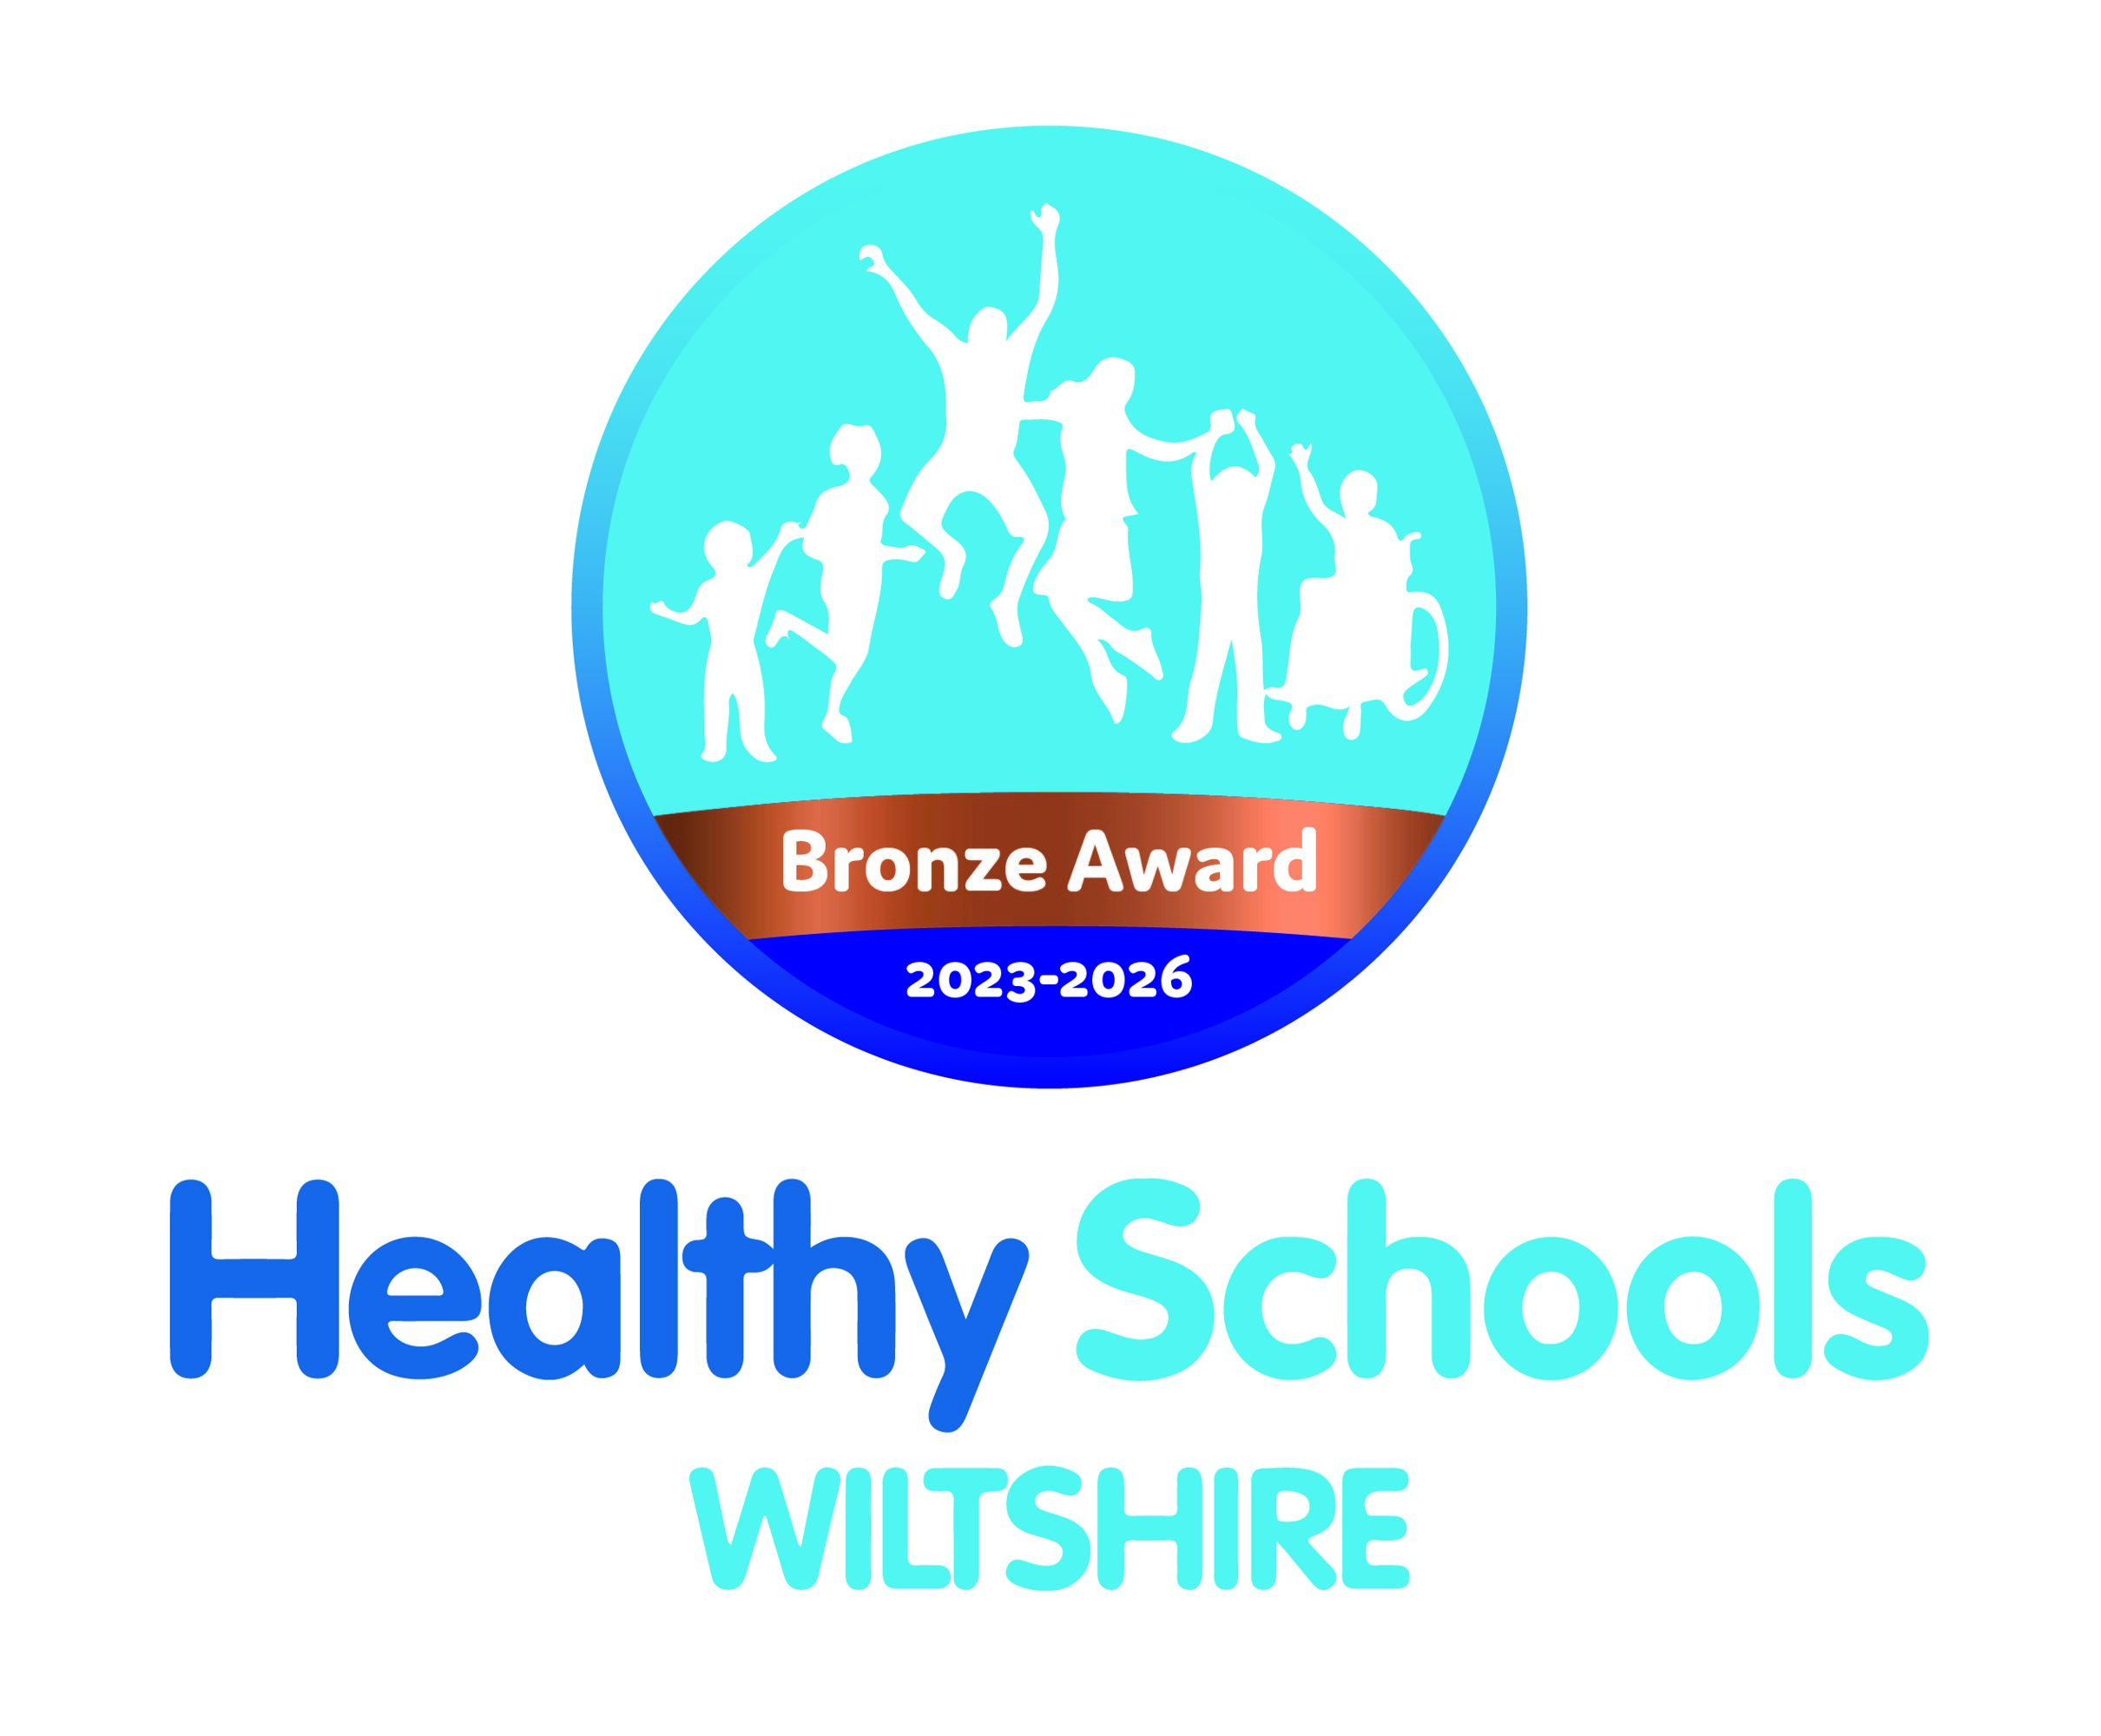 Healthy schools logos 2023 2026 bronze